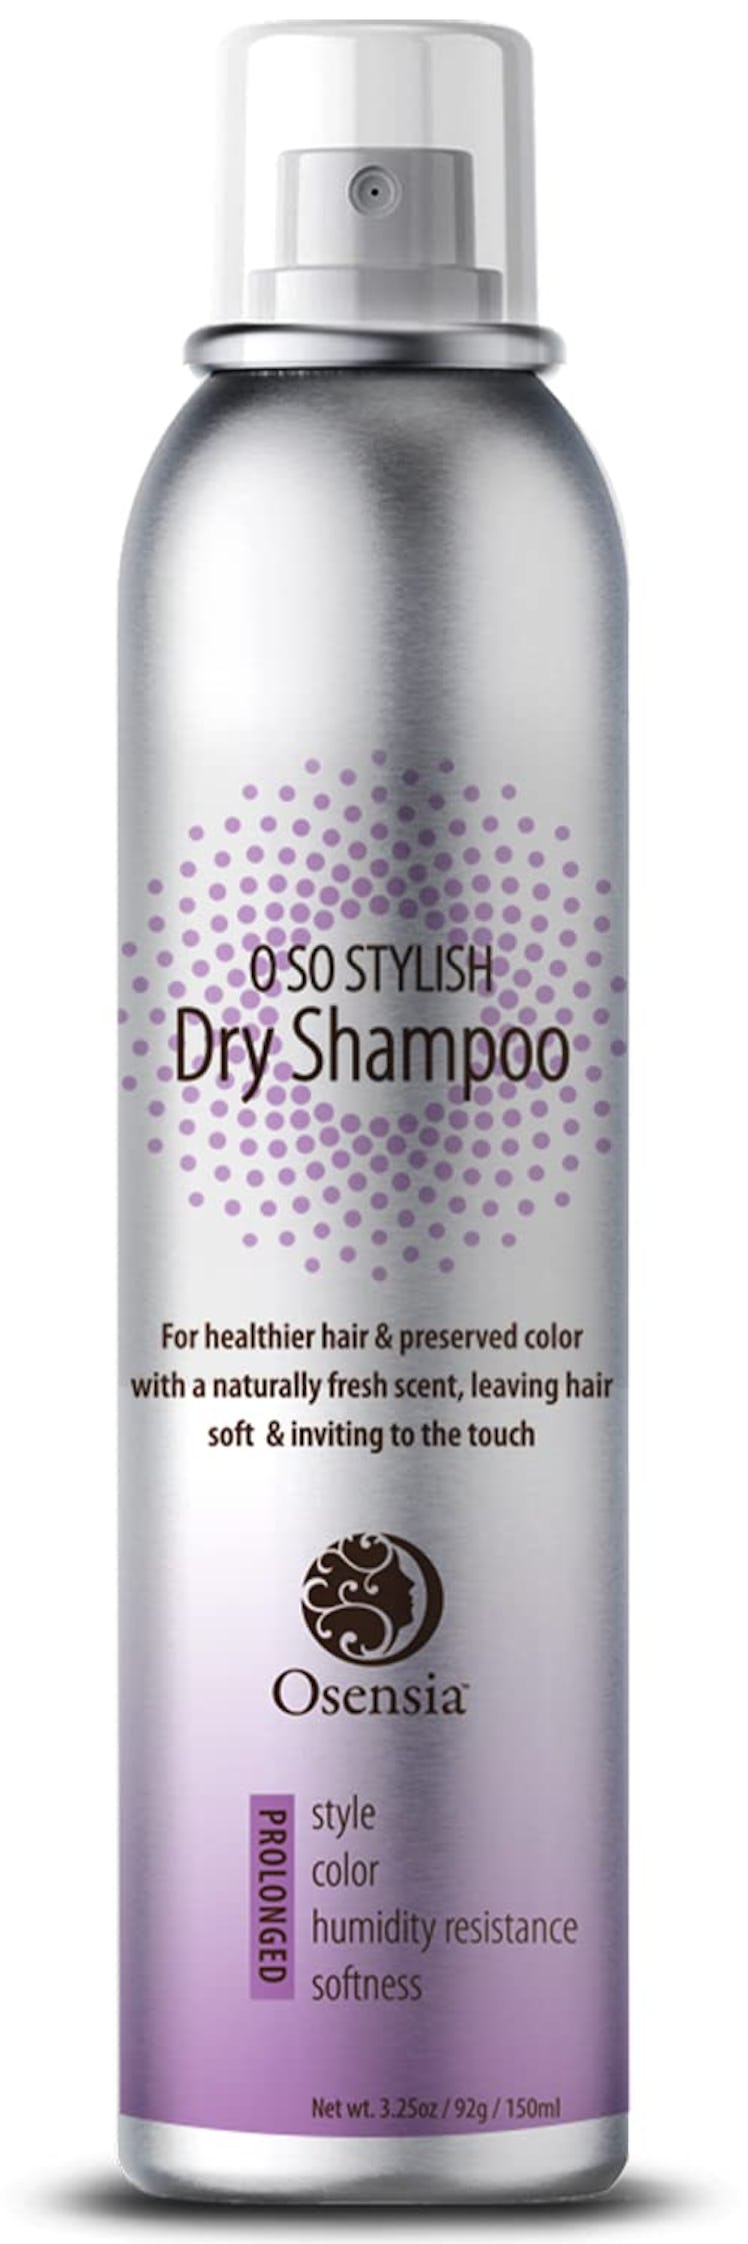 Osensia Dry Shampoo